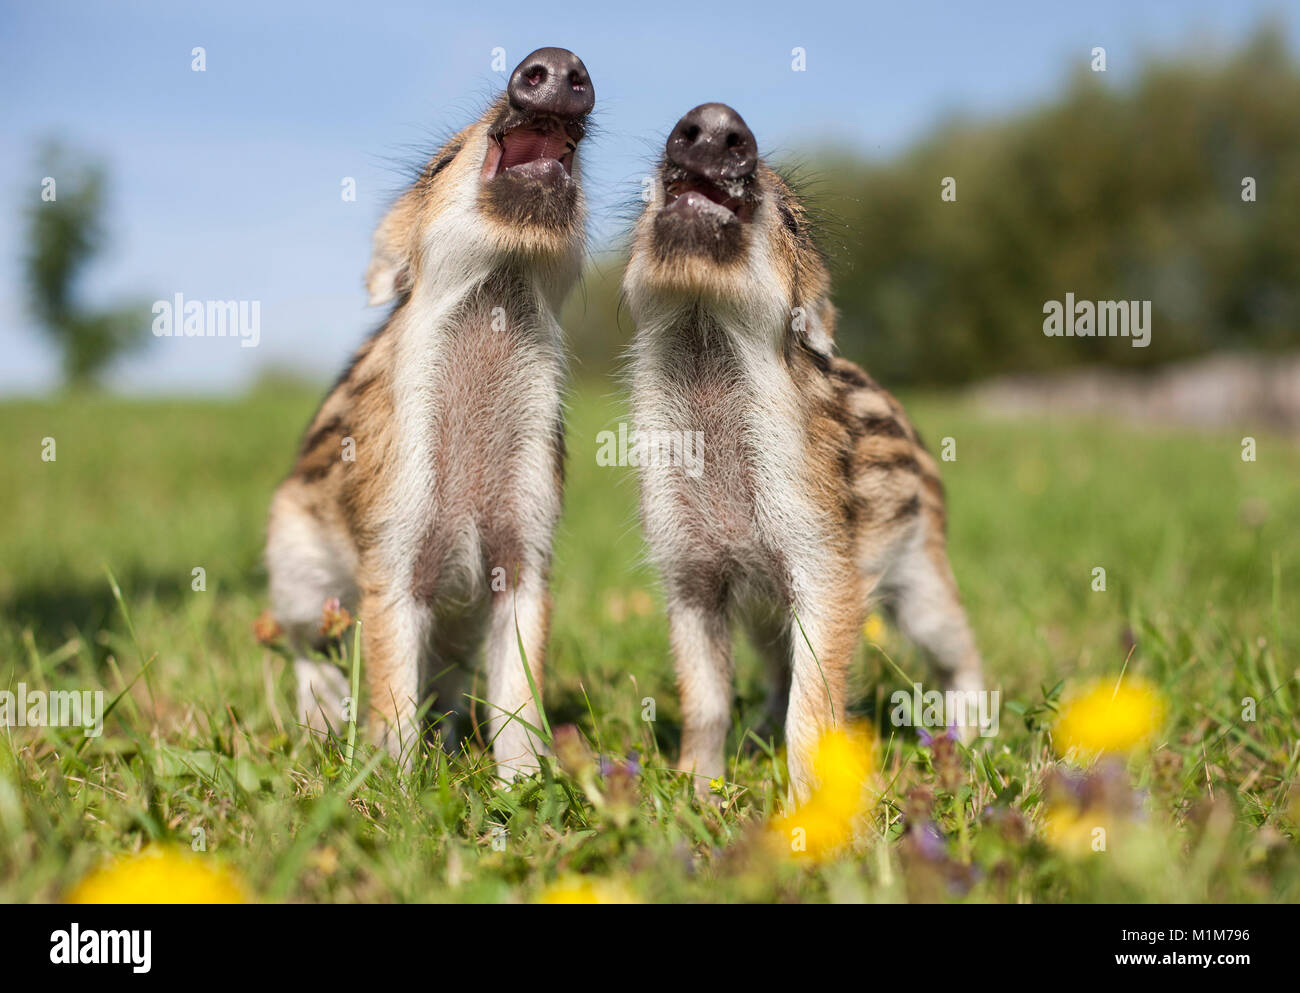 Wild Boar (Sus scrofa). Two shoats on a meadow, seems to sing. Germany. Stock Photo